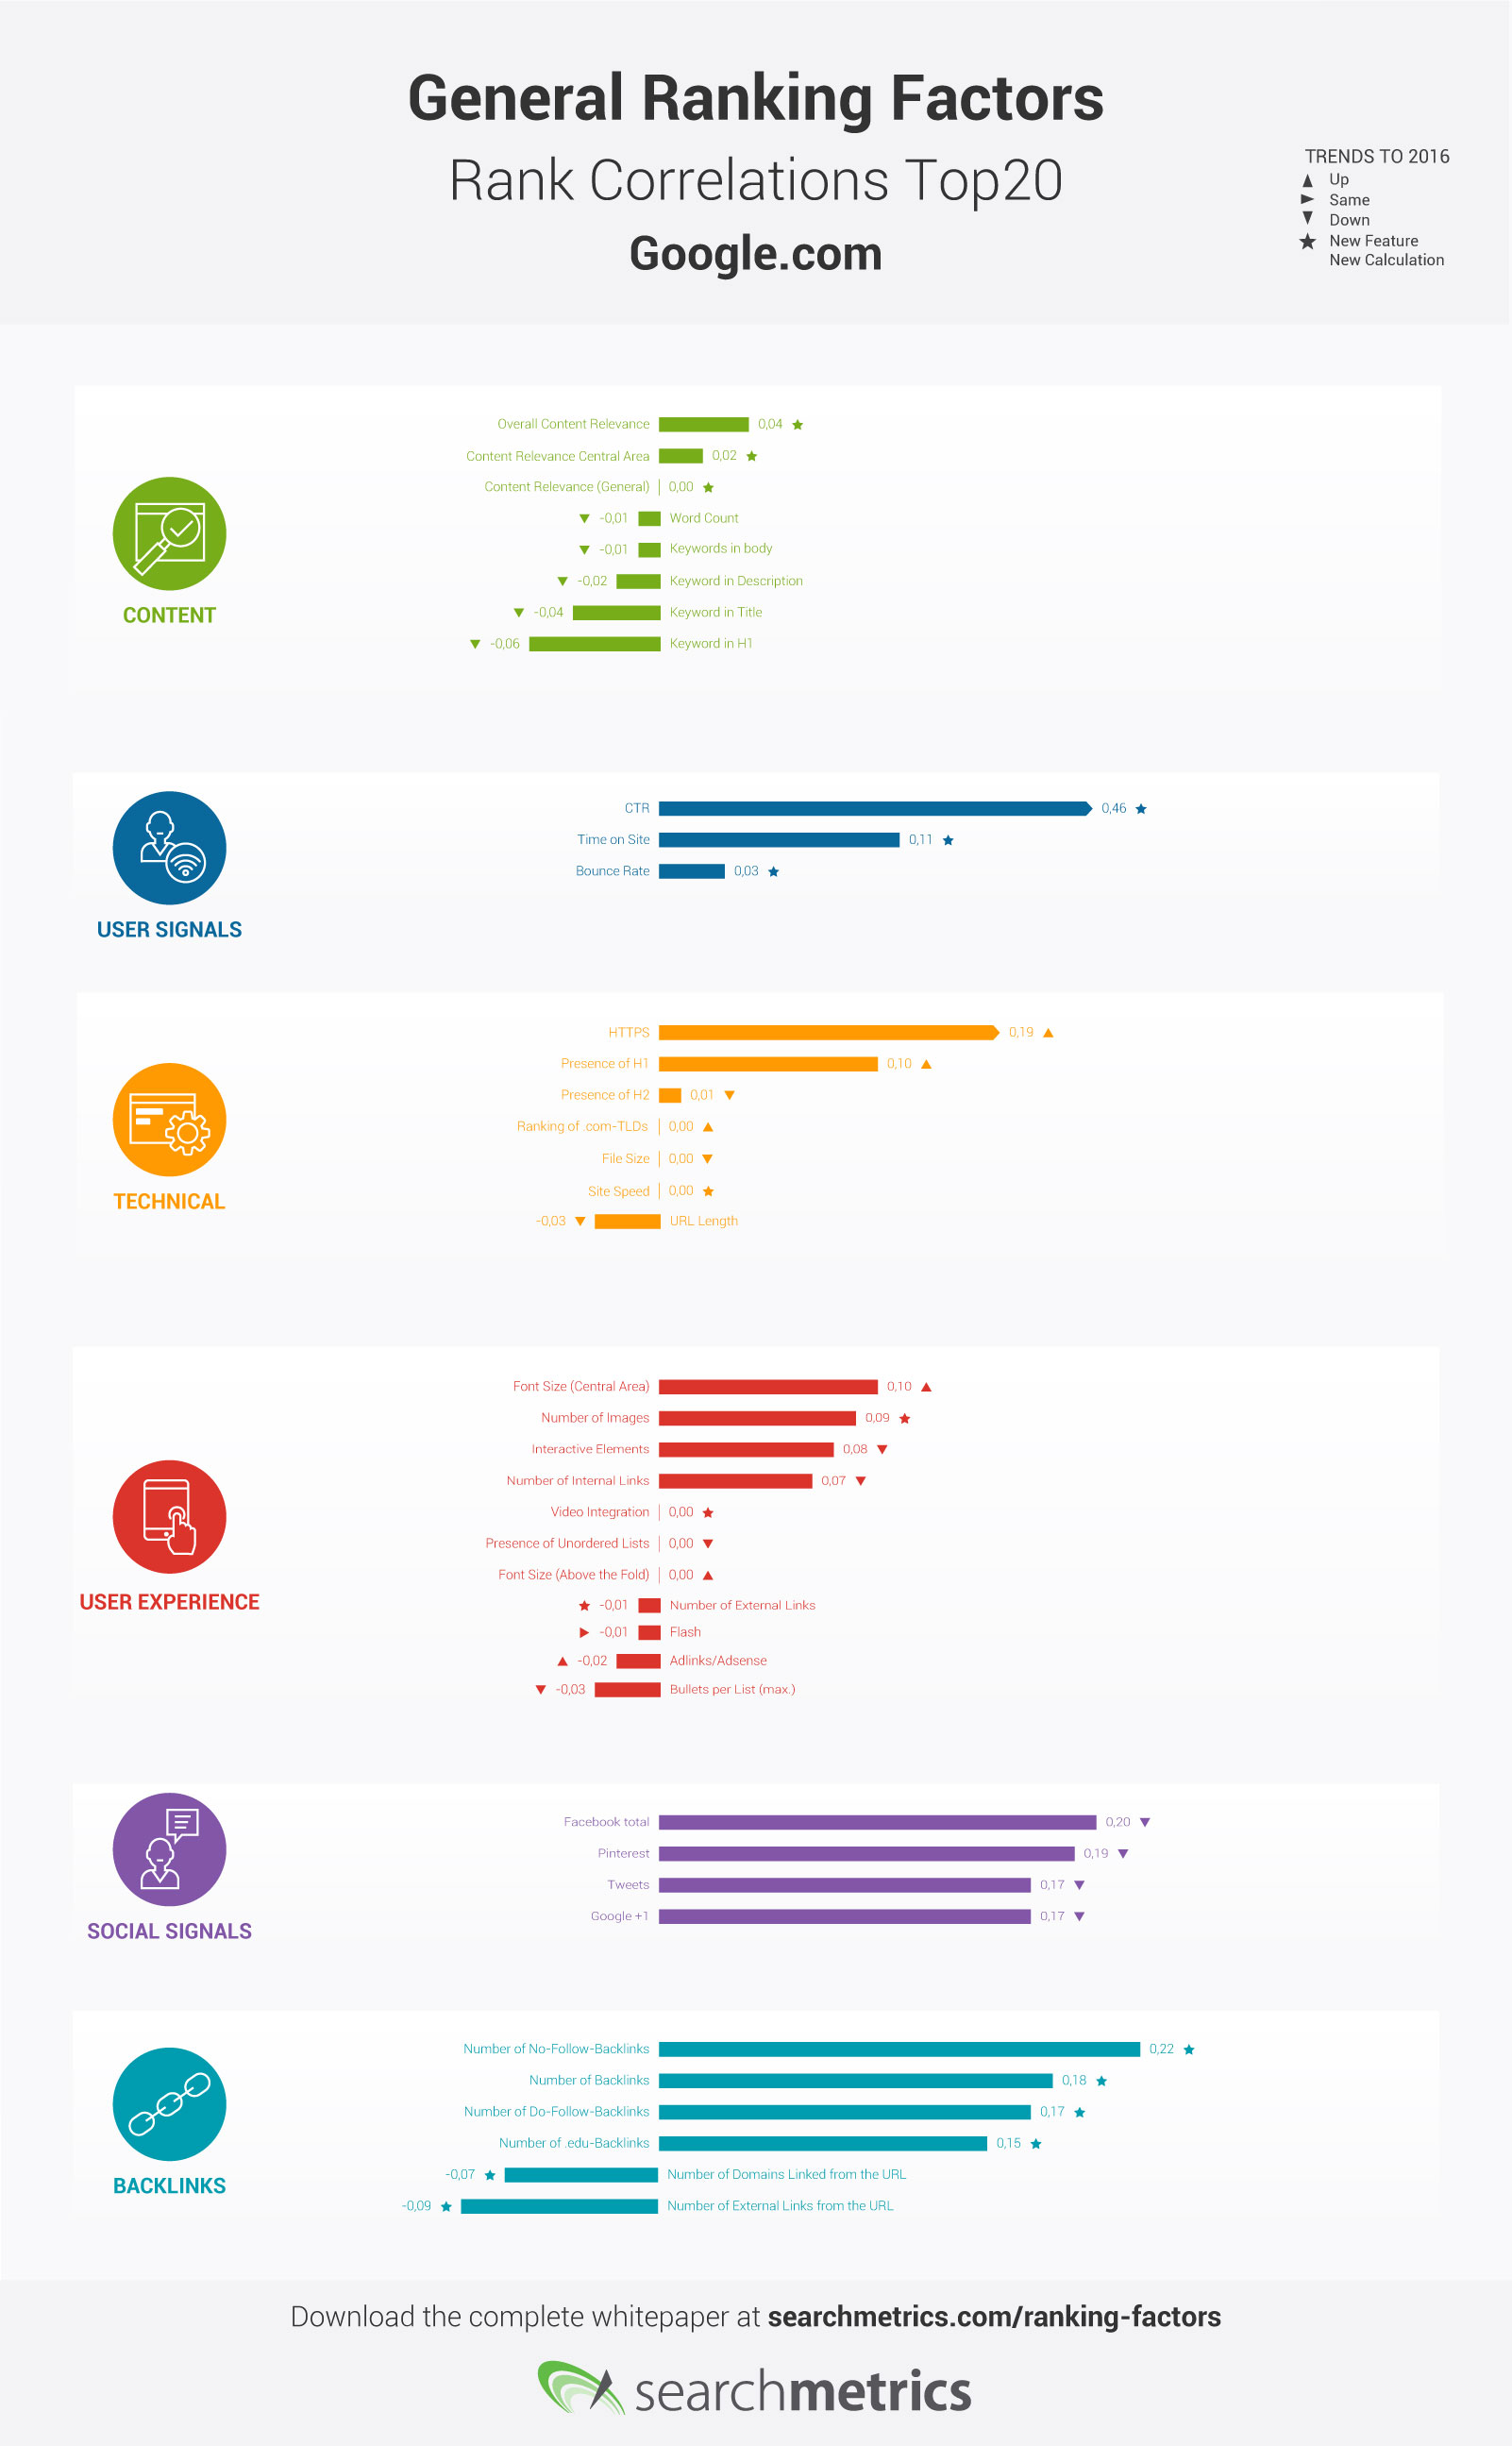 Searchmetrics-Ranking-Factors-Infographic-EN